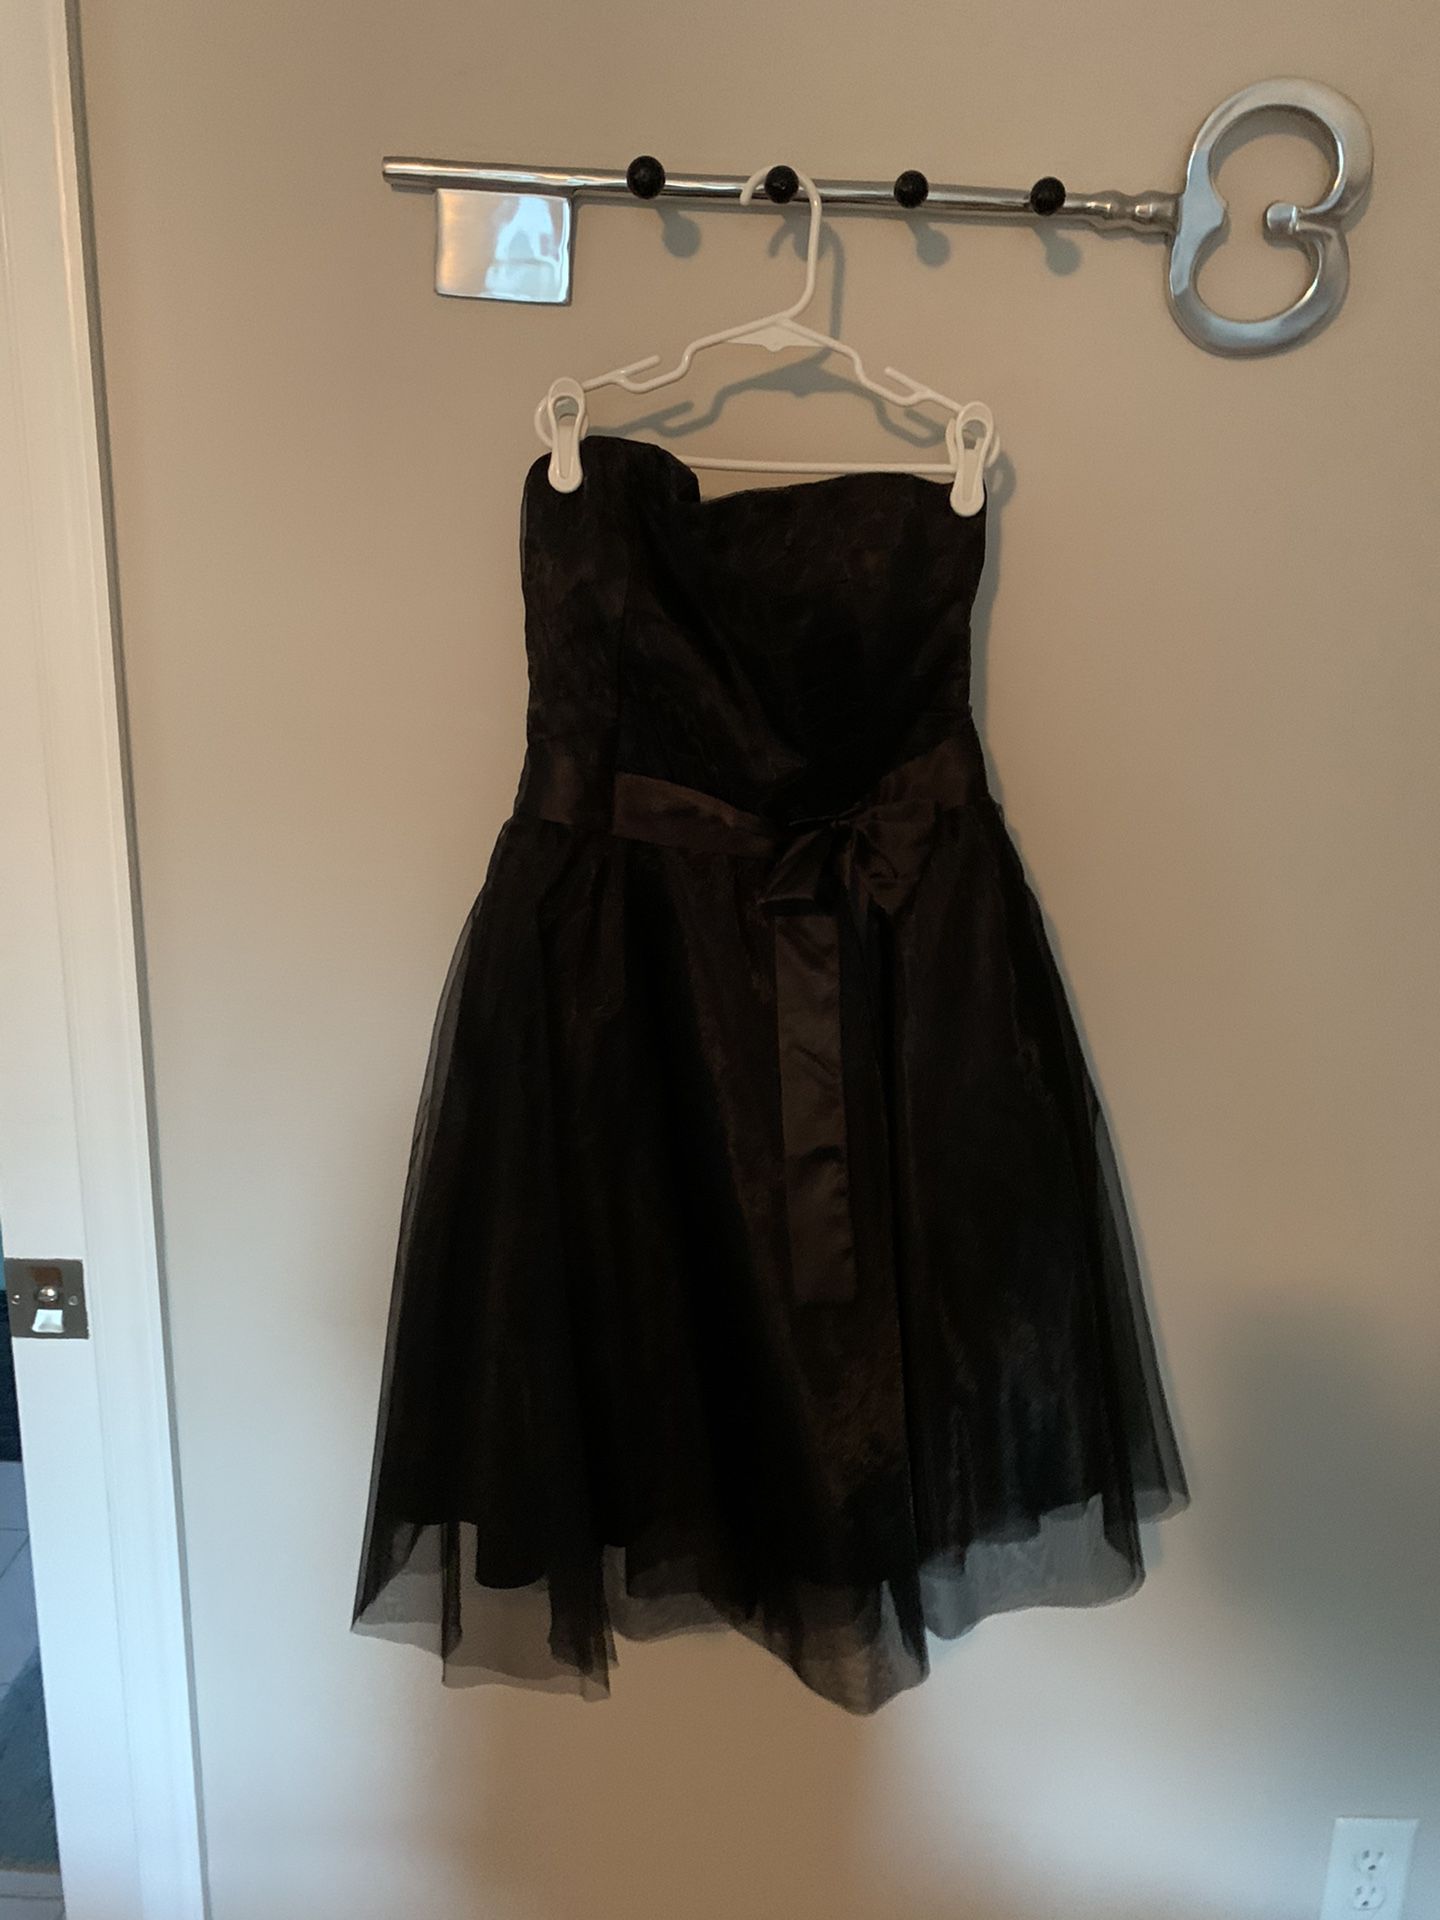 New black cocktail dress